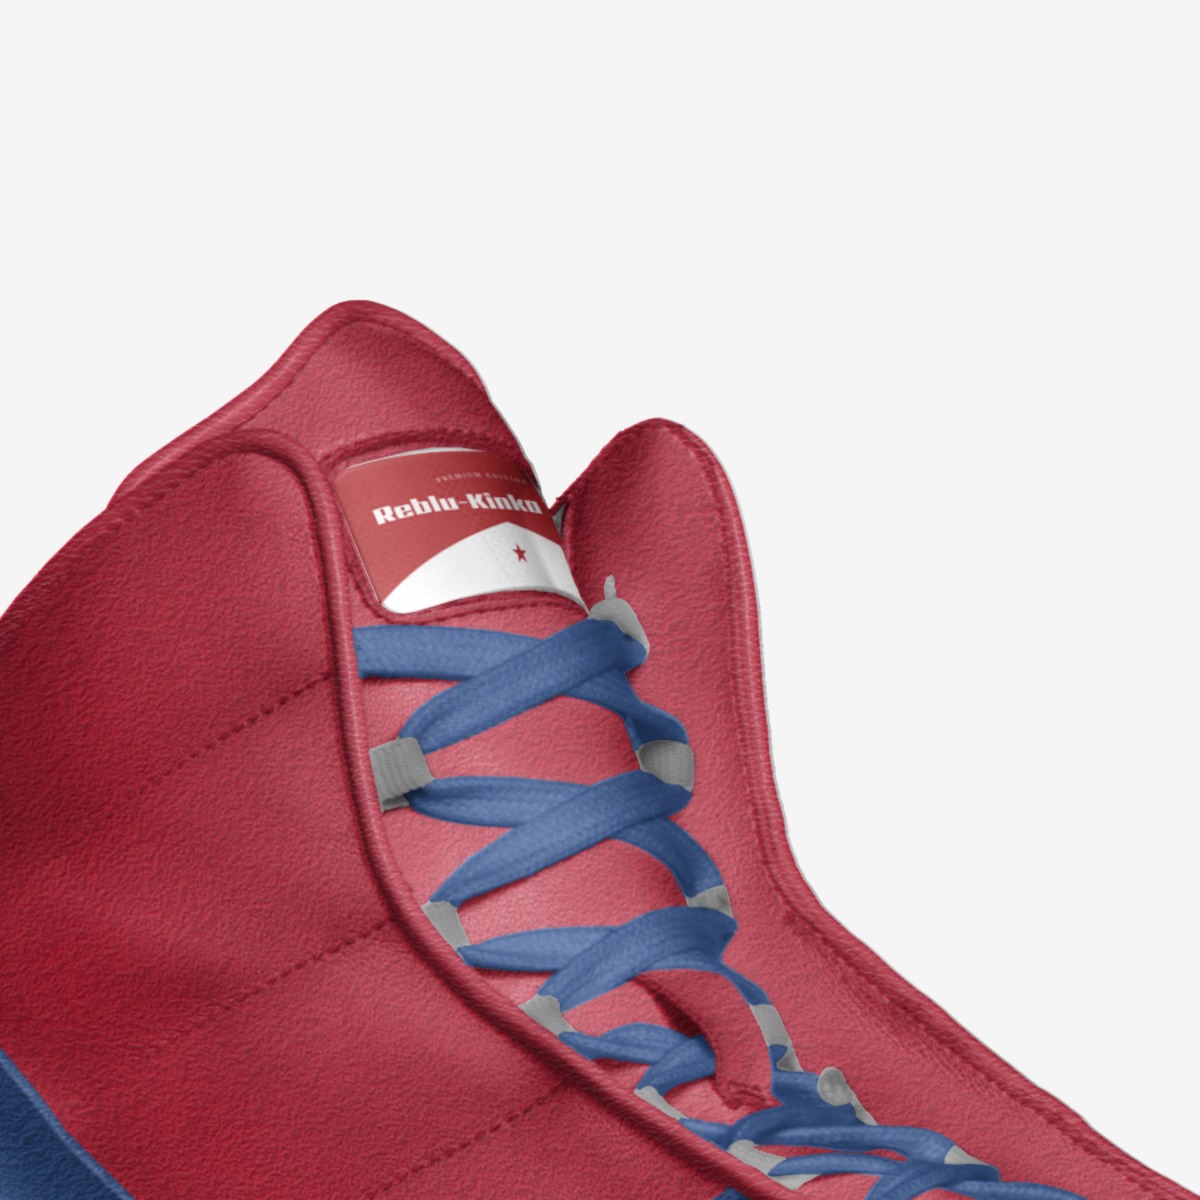 Reblu-Kinka T Kix  A Custom Shoe concept by Kinka T Kix